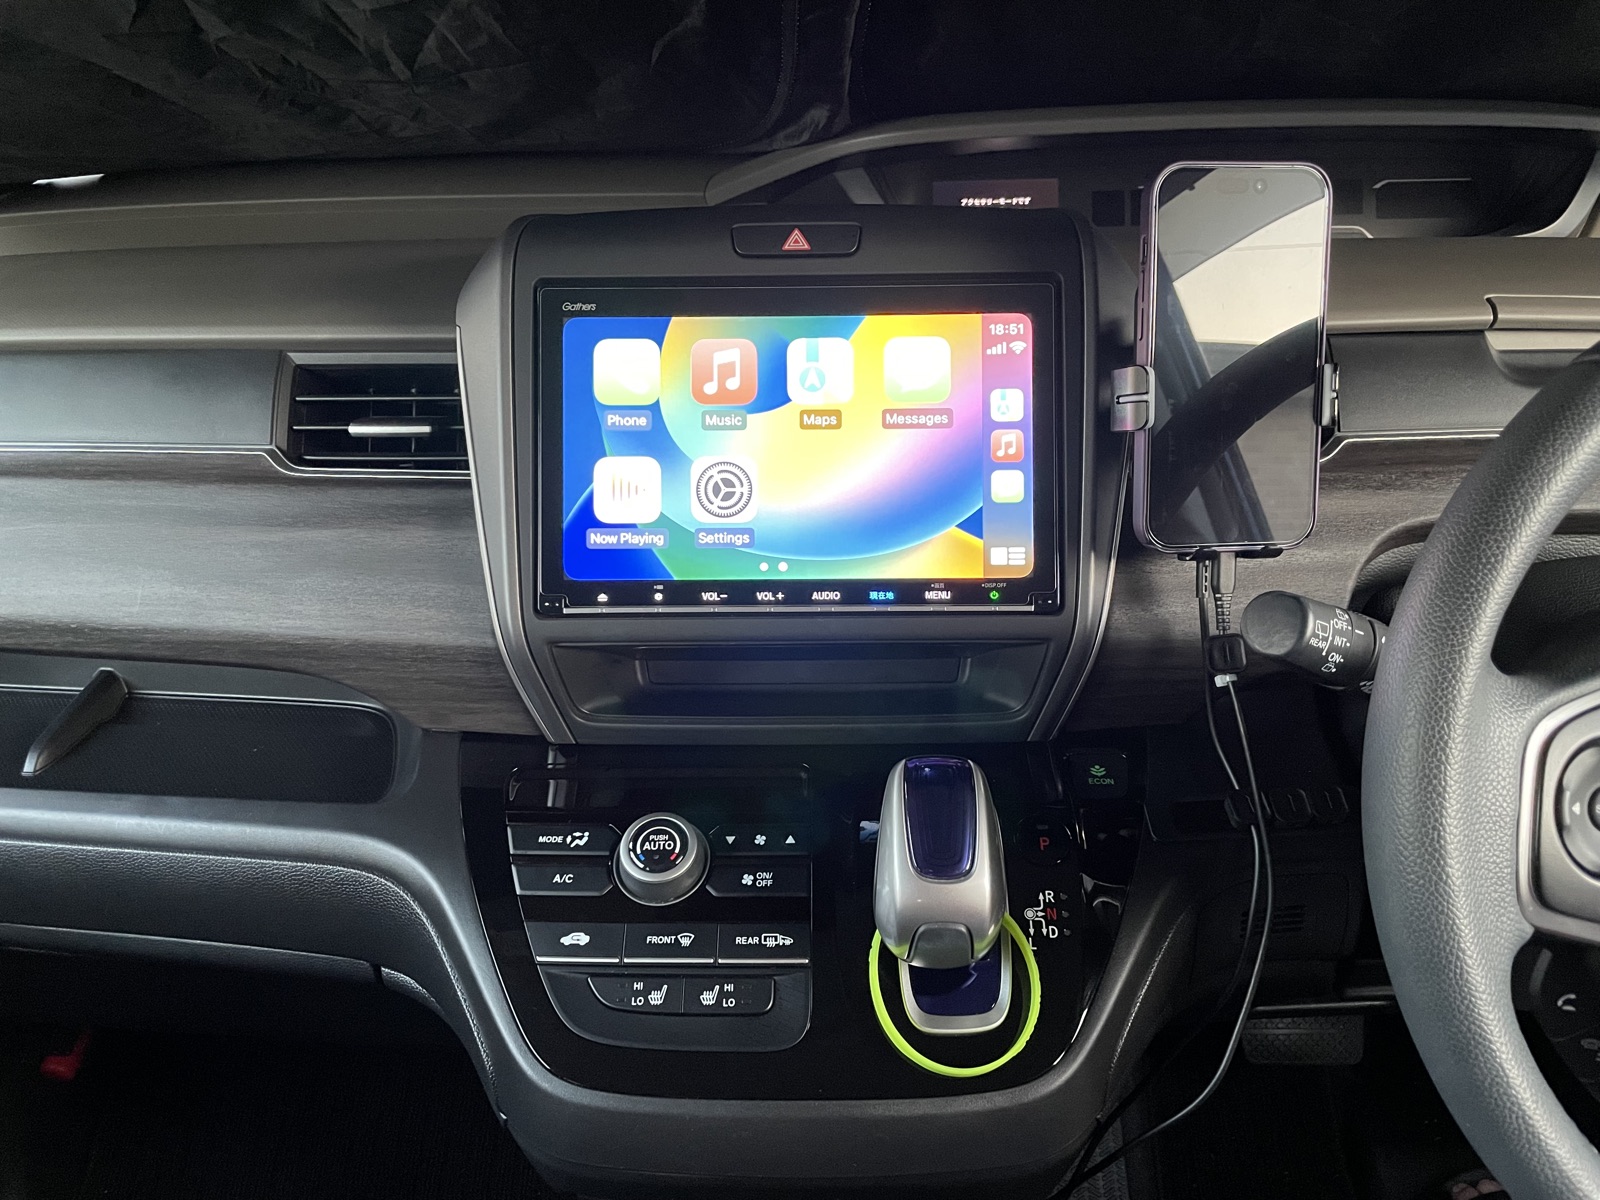 Honda Freed + Gathers + Apple CarPlay